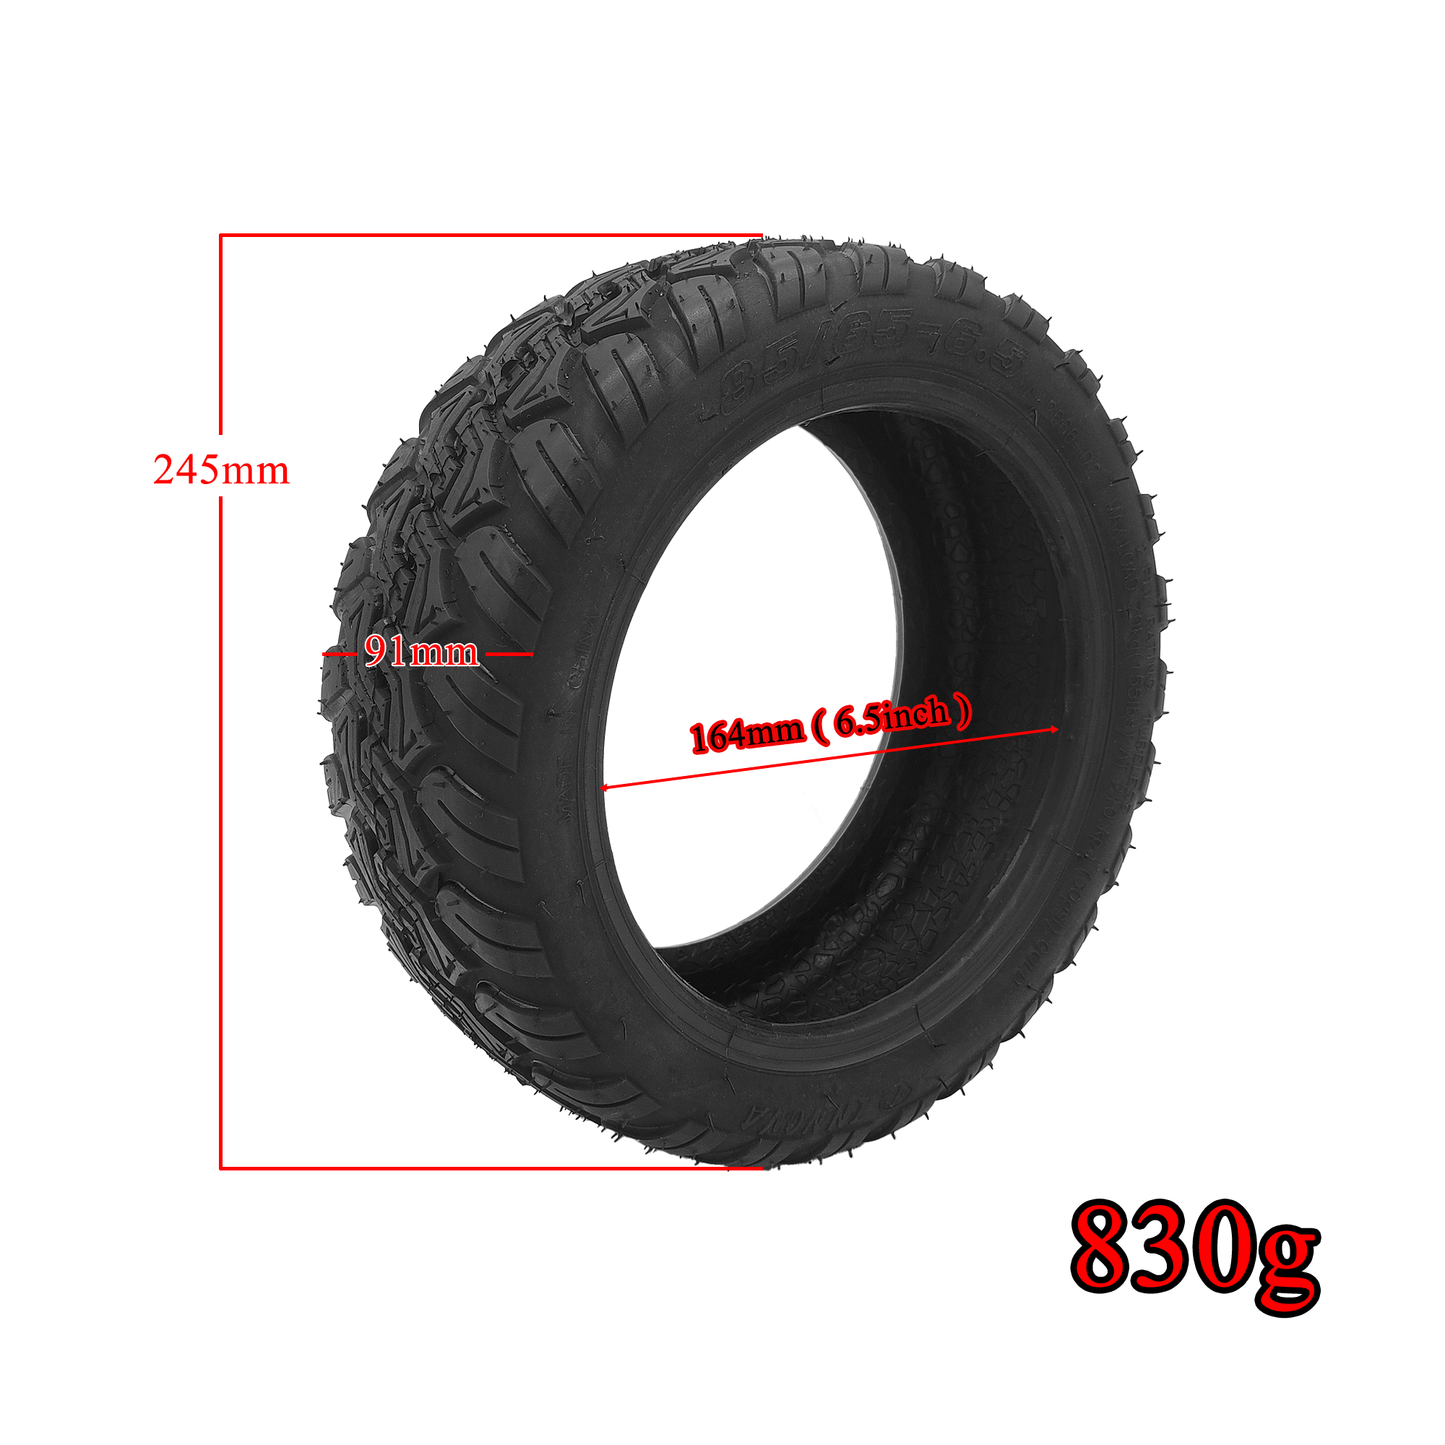 Innova 85/65-6.5 tires off-road tubeless